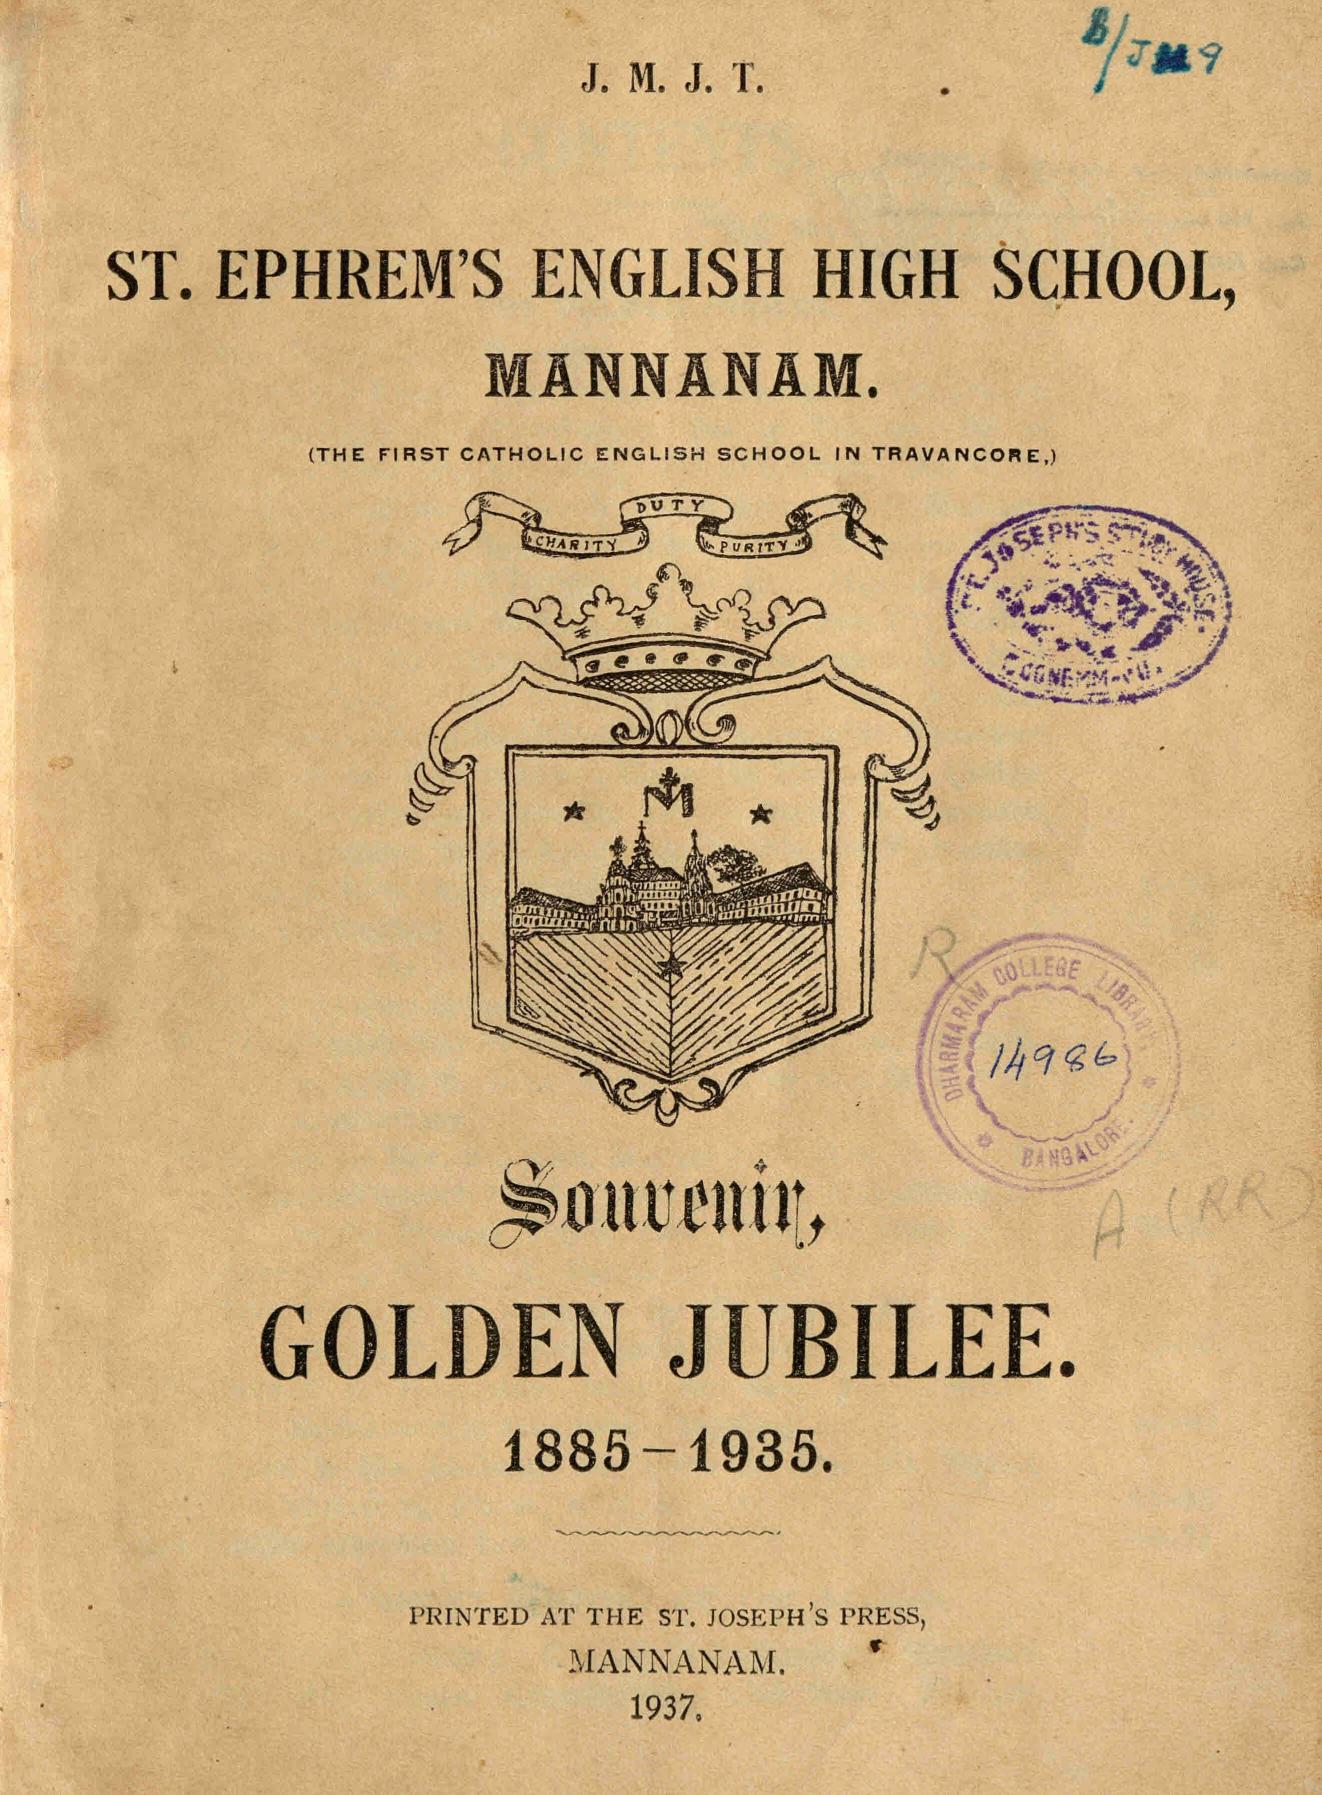 1937 - St. Ephrems English High School - Mannanam - Golden Jubilee Souvenir